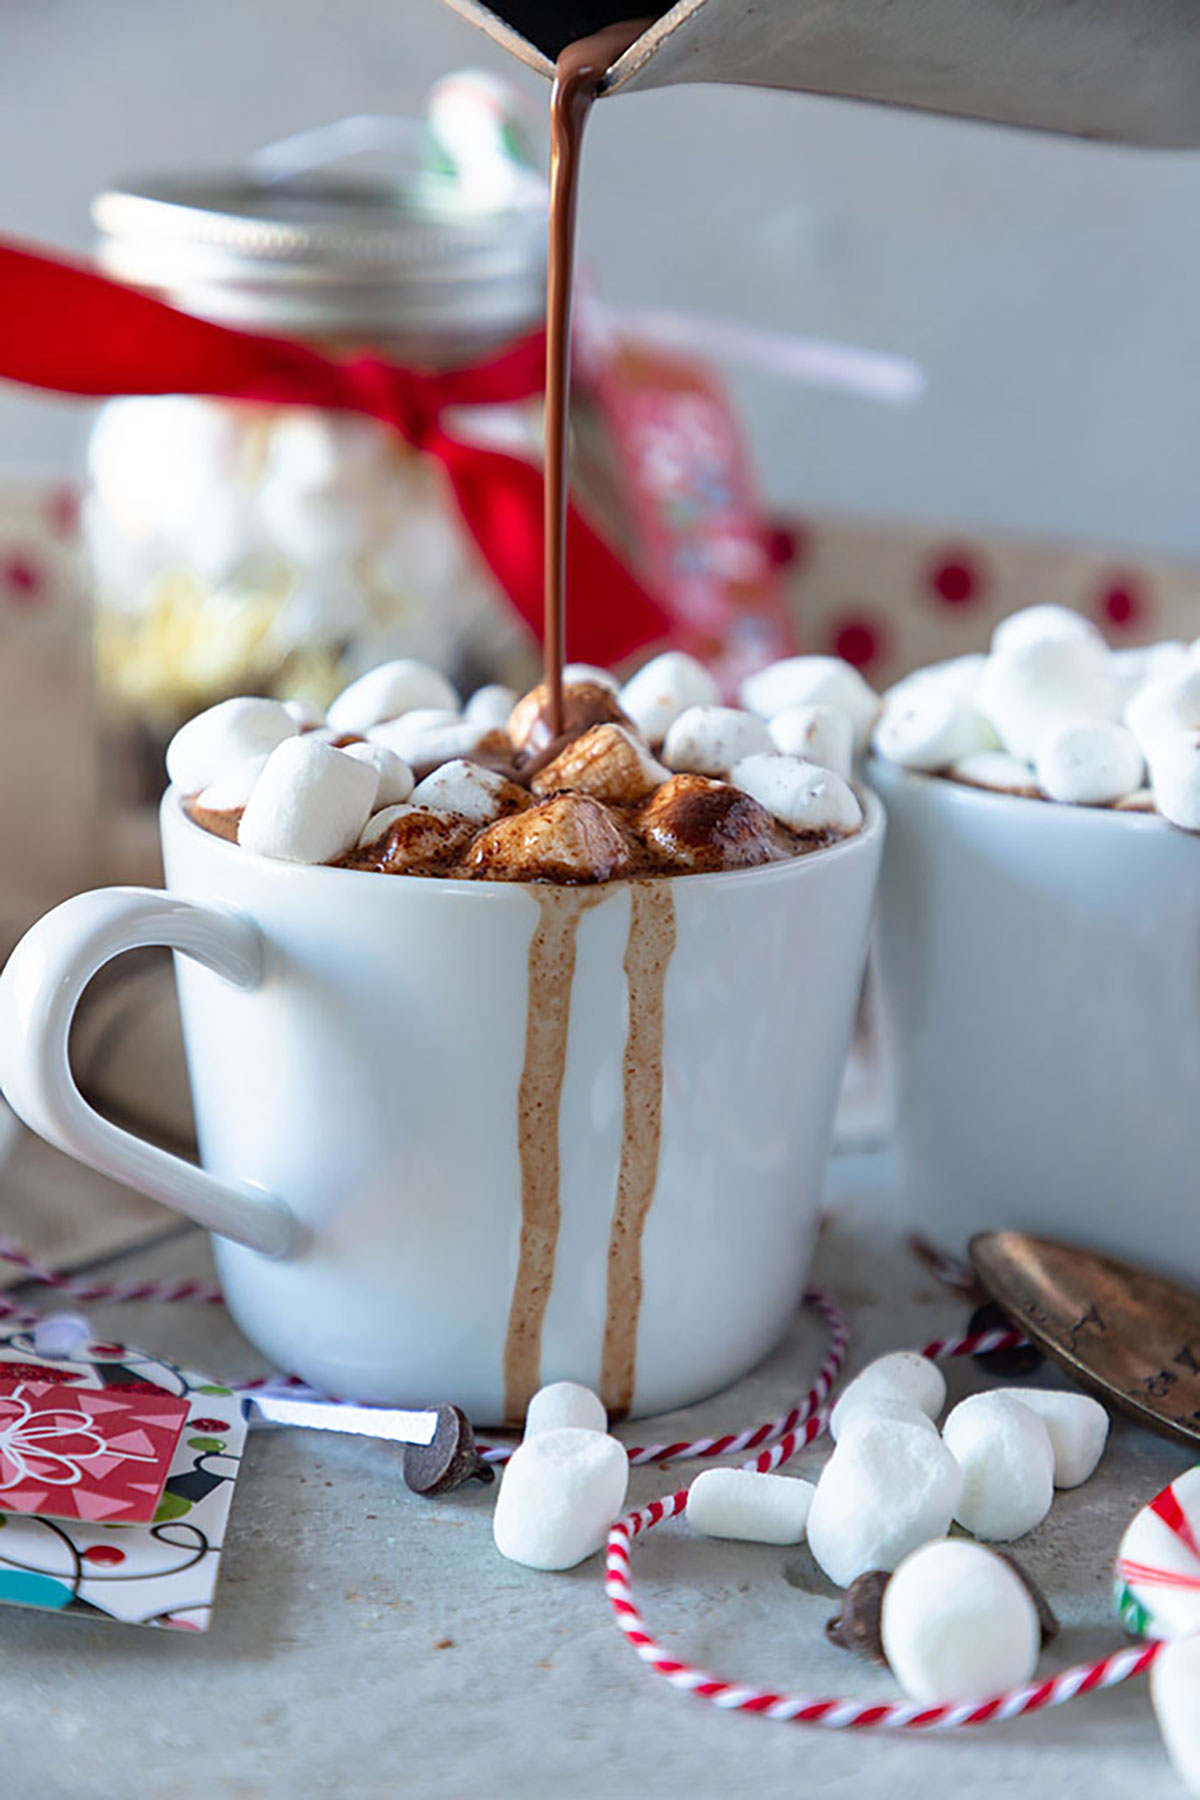 hot chocolate poured into a white mug